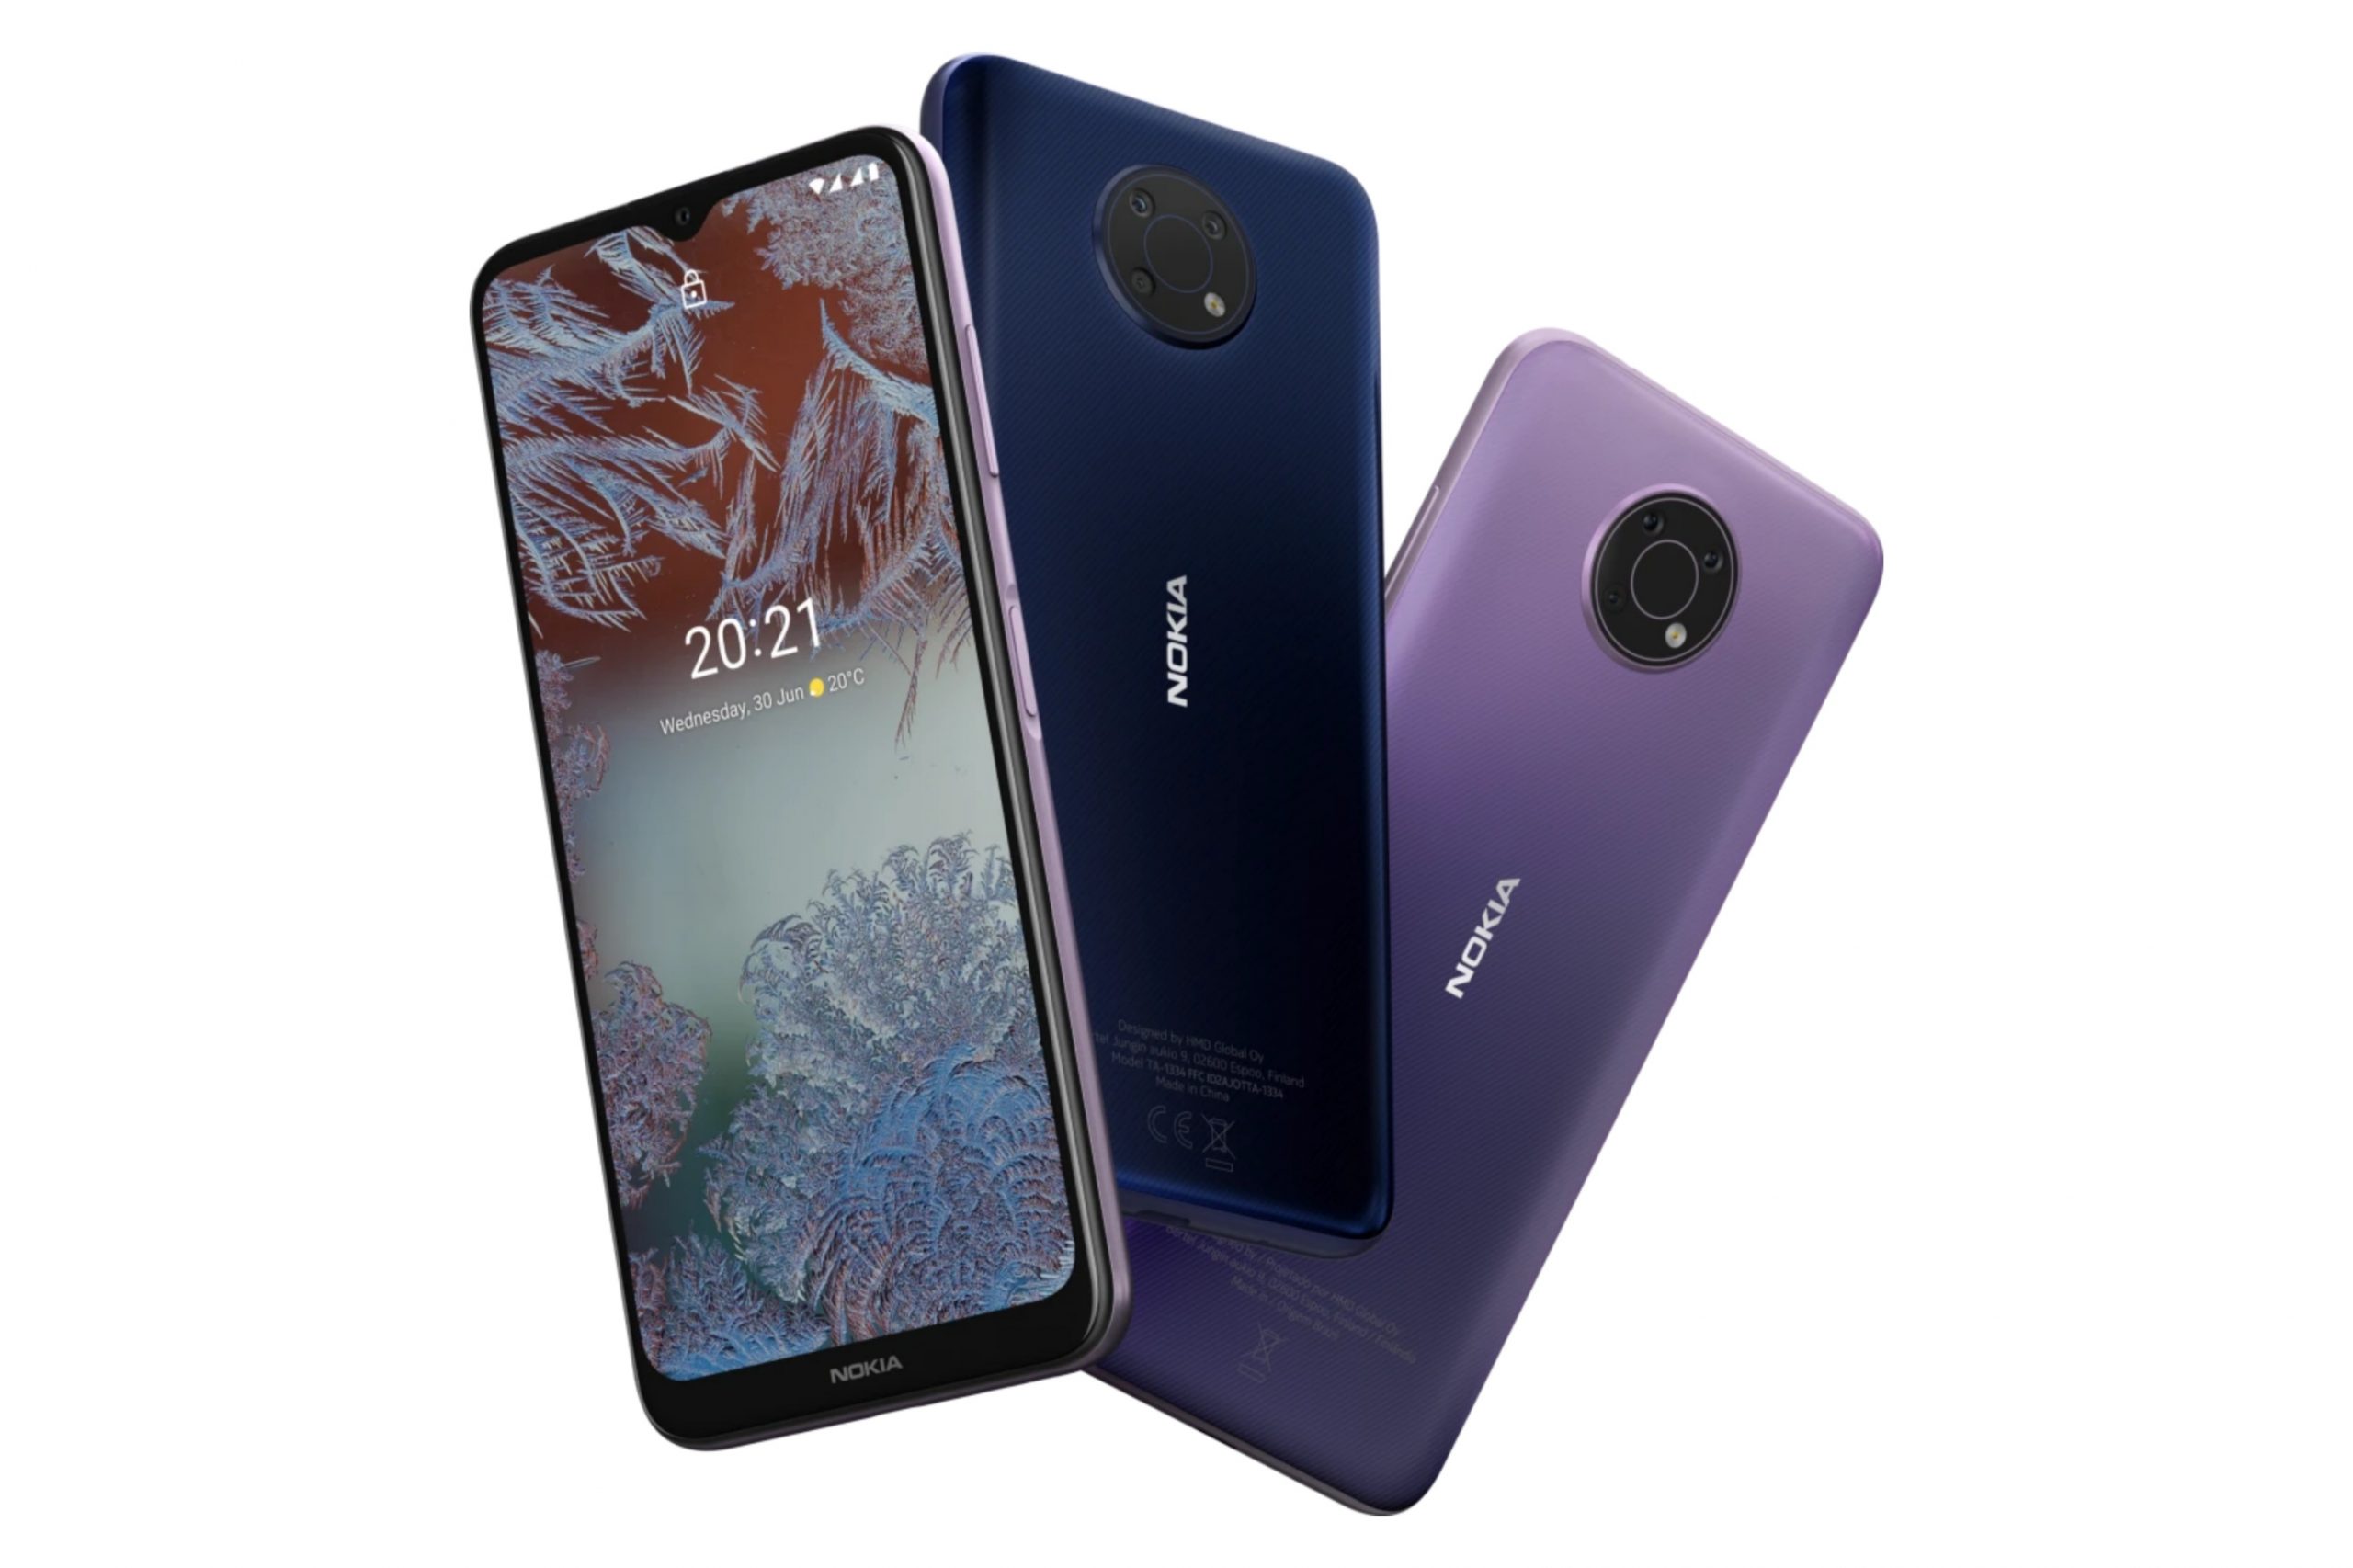 Nokia G10 Price in Nepal